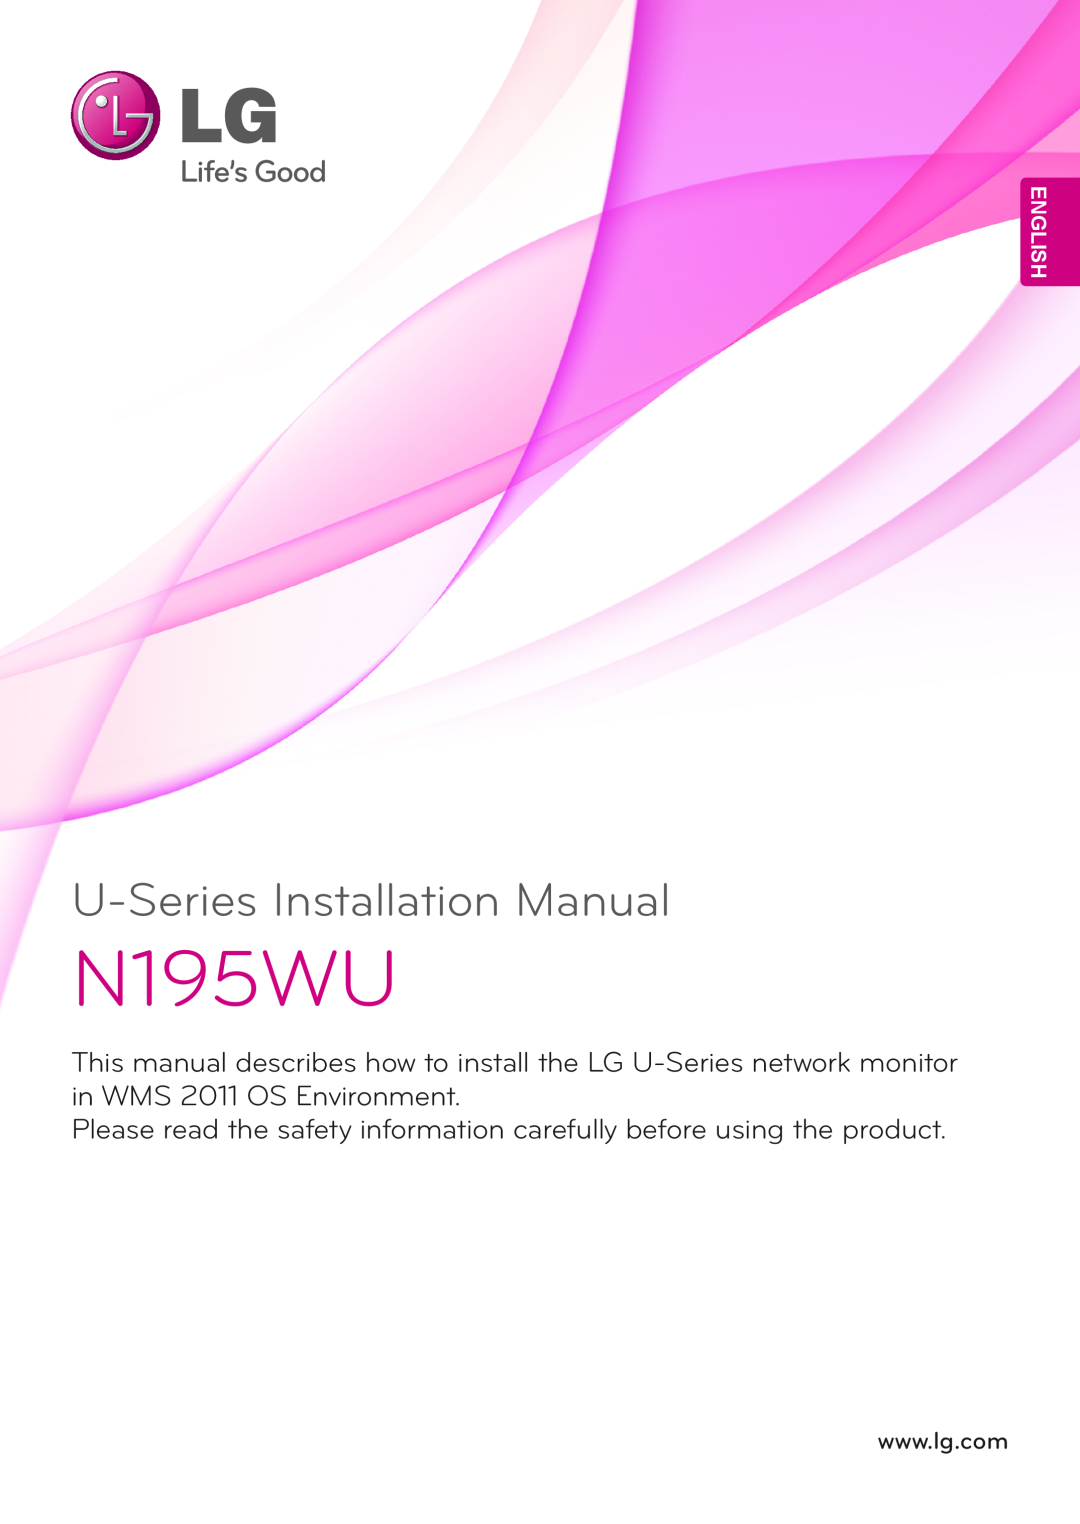 LG Electronics N195WU installation manual U-Series Installation Manual, English 